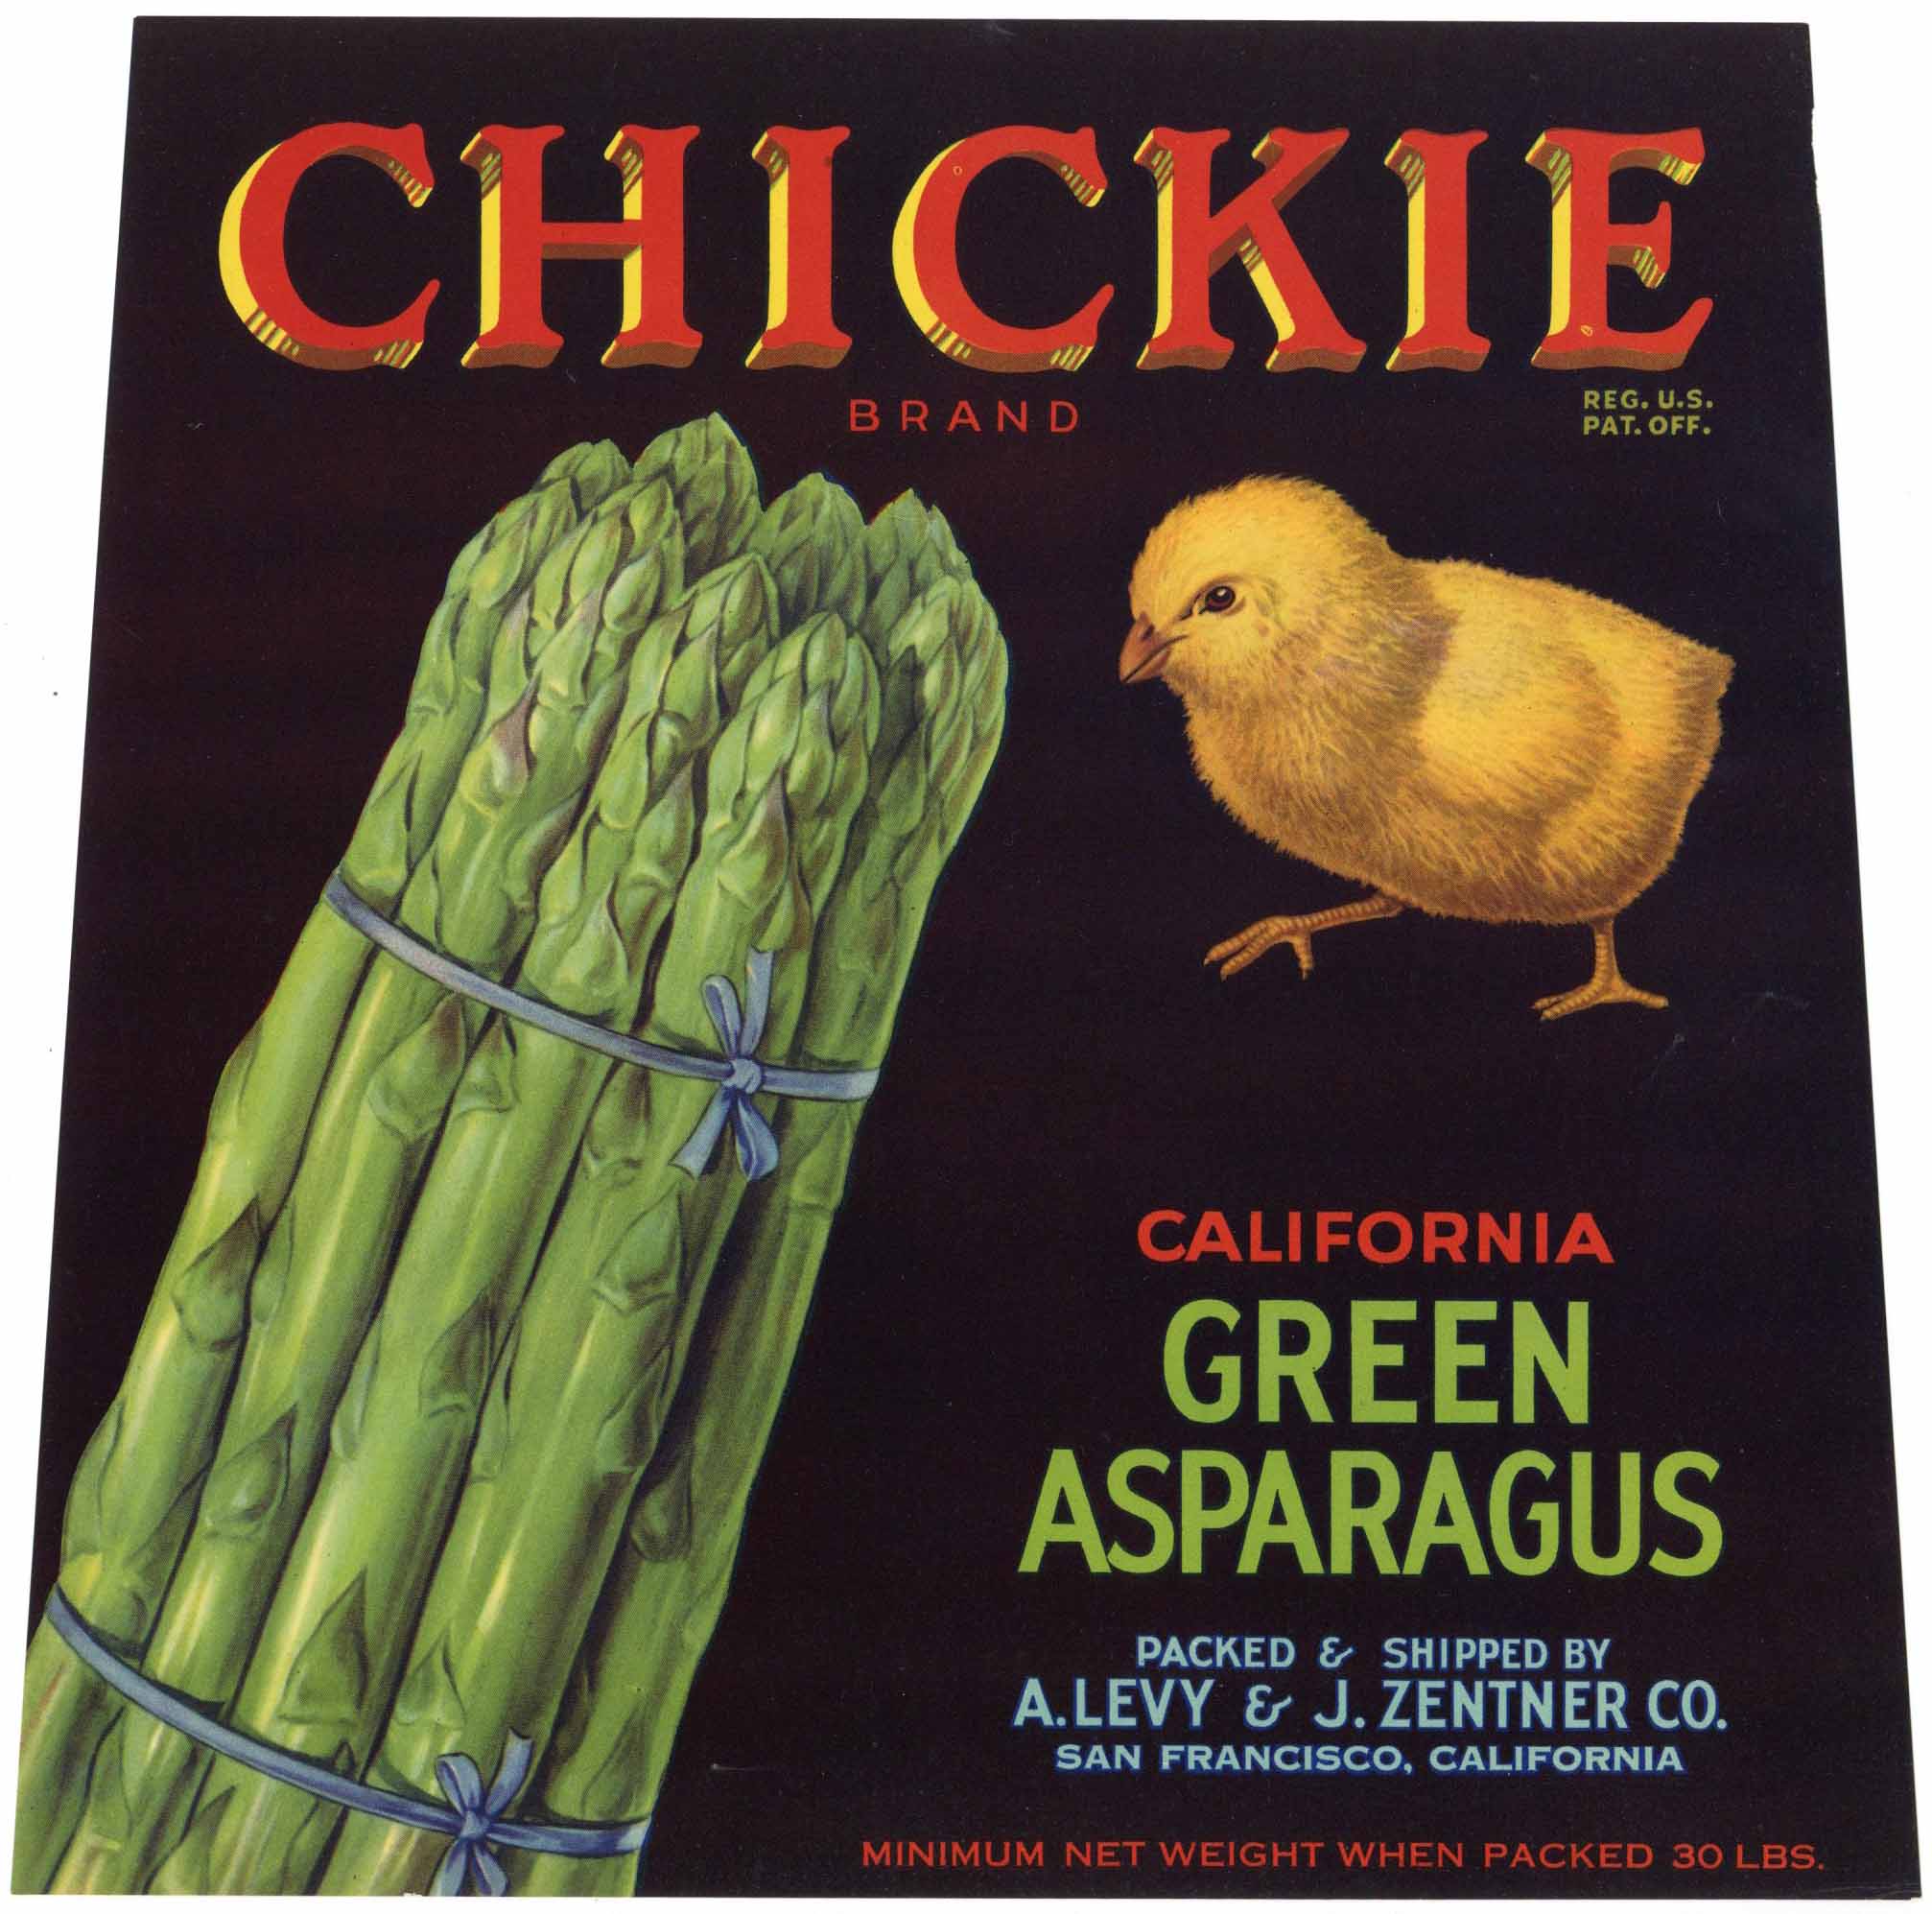 Chickie Brand Vintage Asparagus Crate Label, black